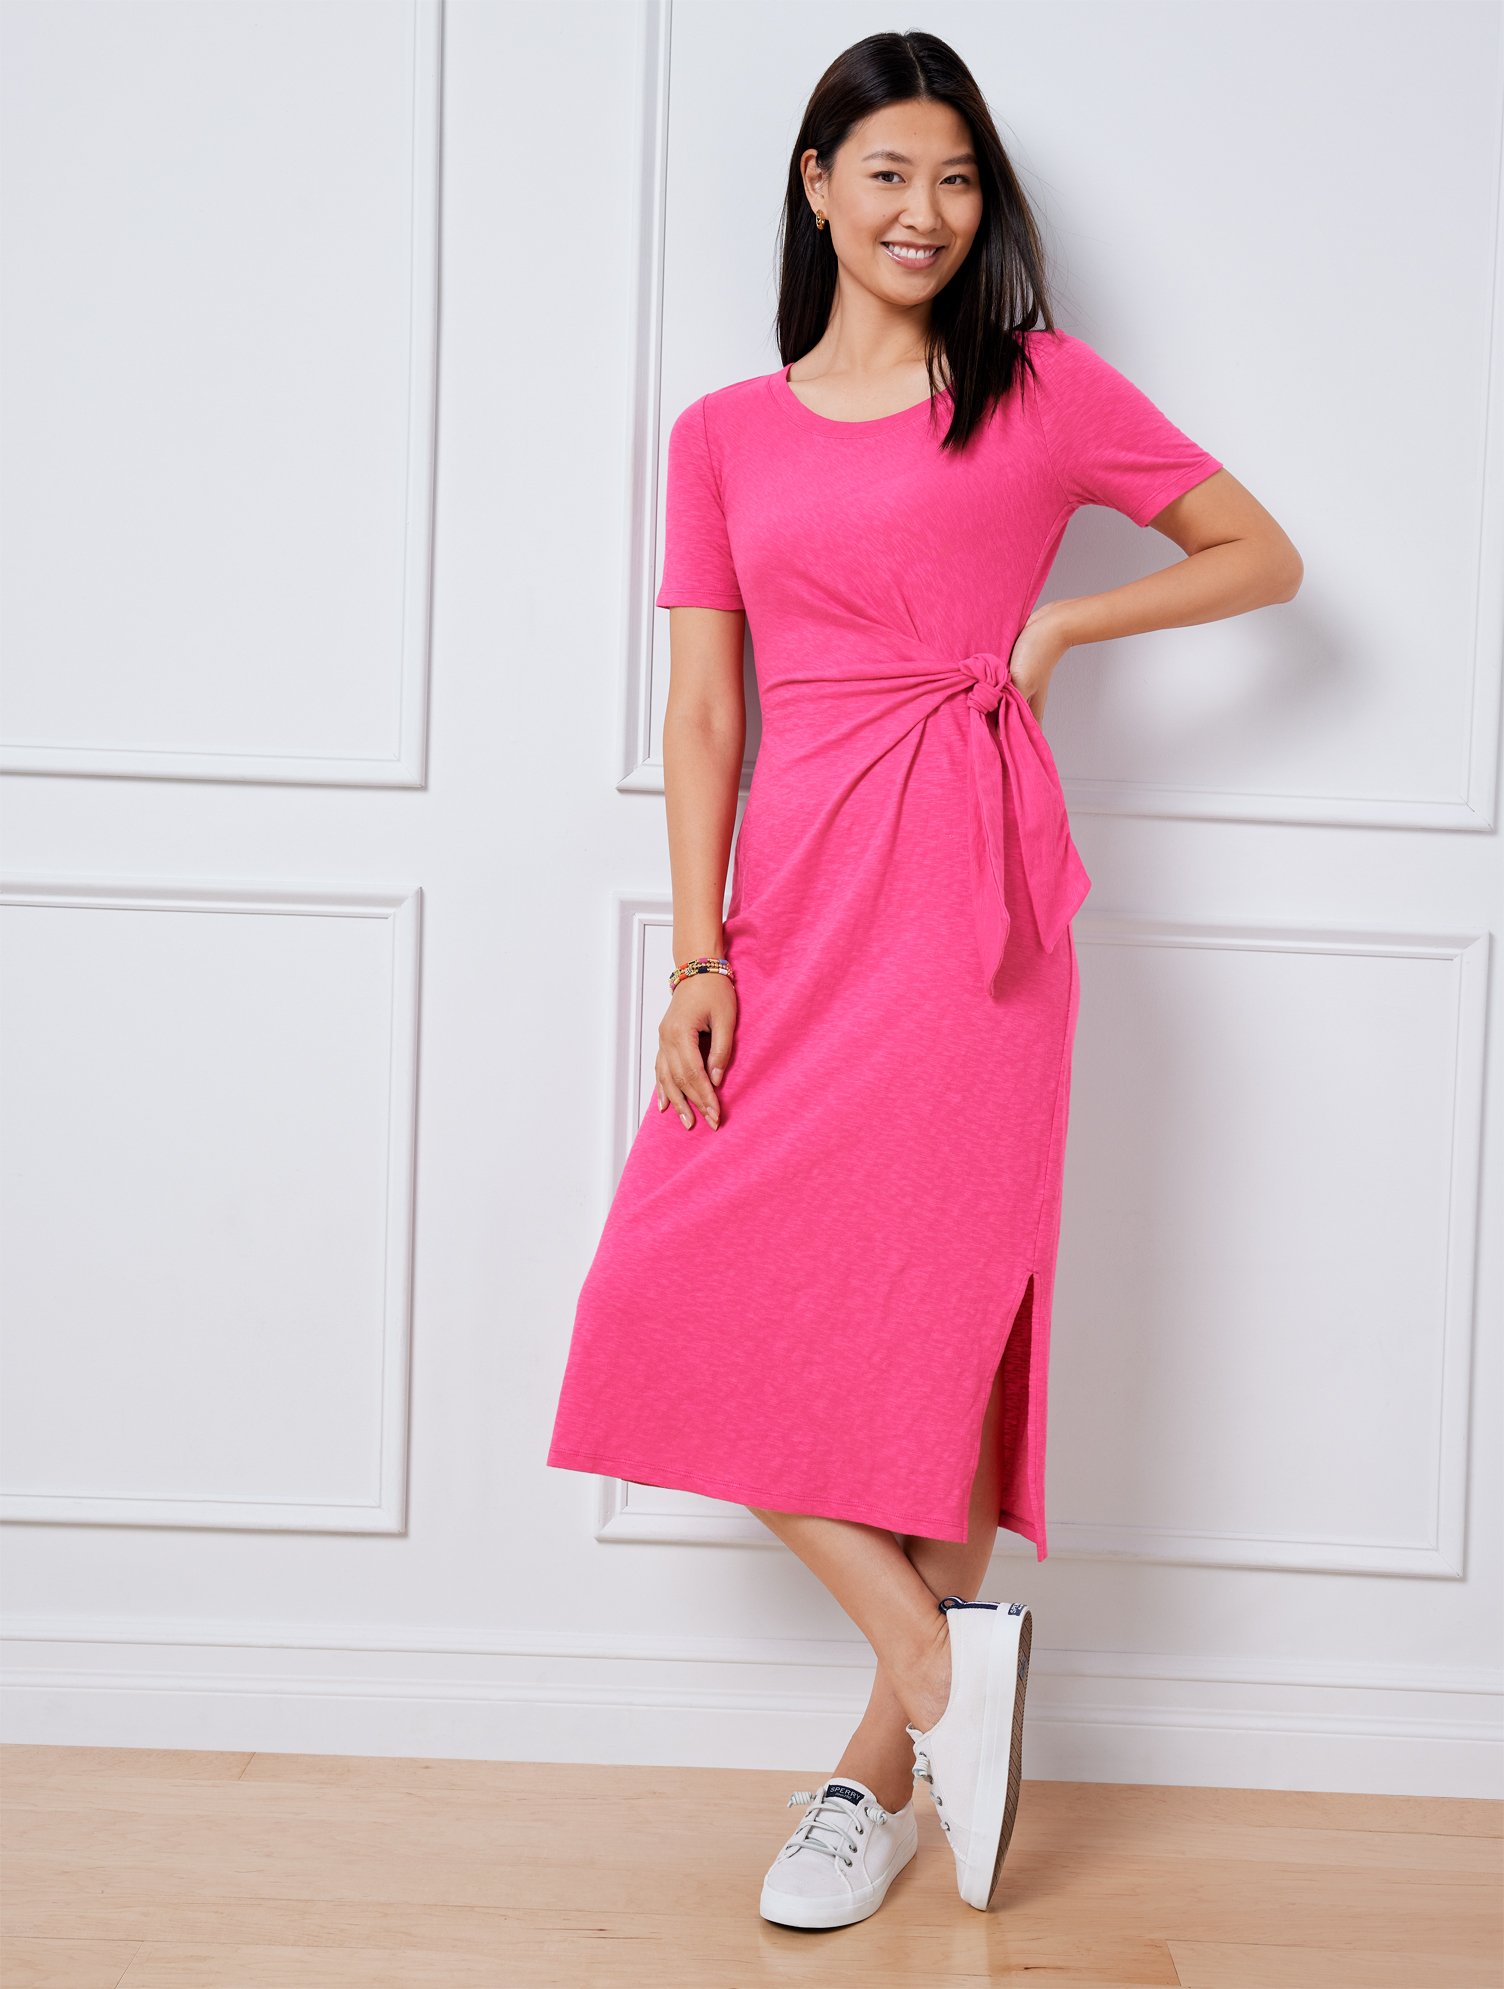 Talbots Nantucket Slub Side Tie Midi Dress - Vivid Pink - Medium - 100% Cotton